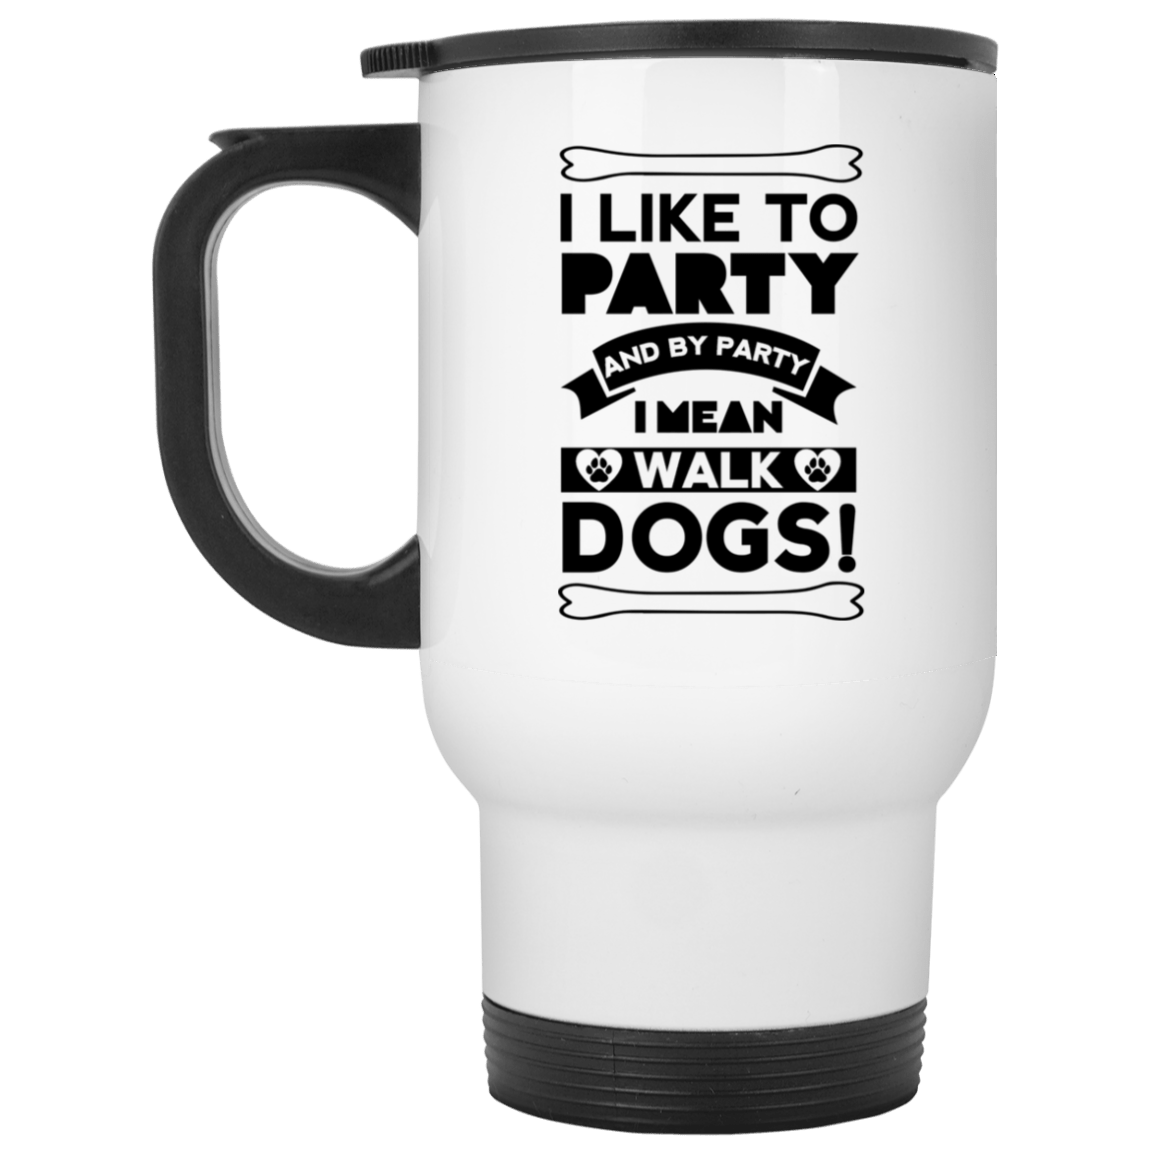 I Like To Party Dogs  - Mugs.